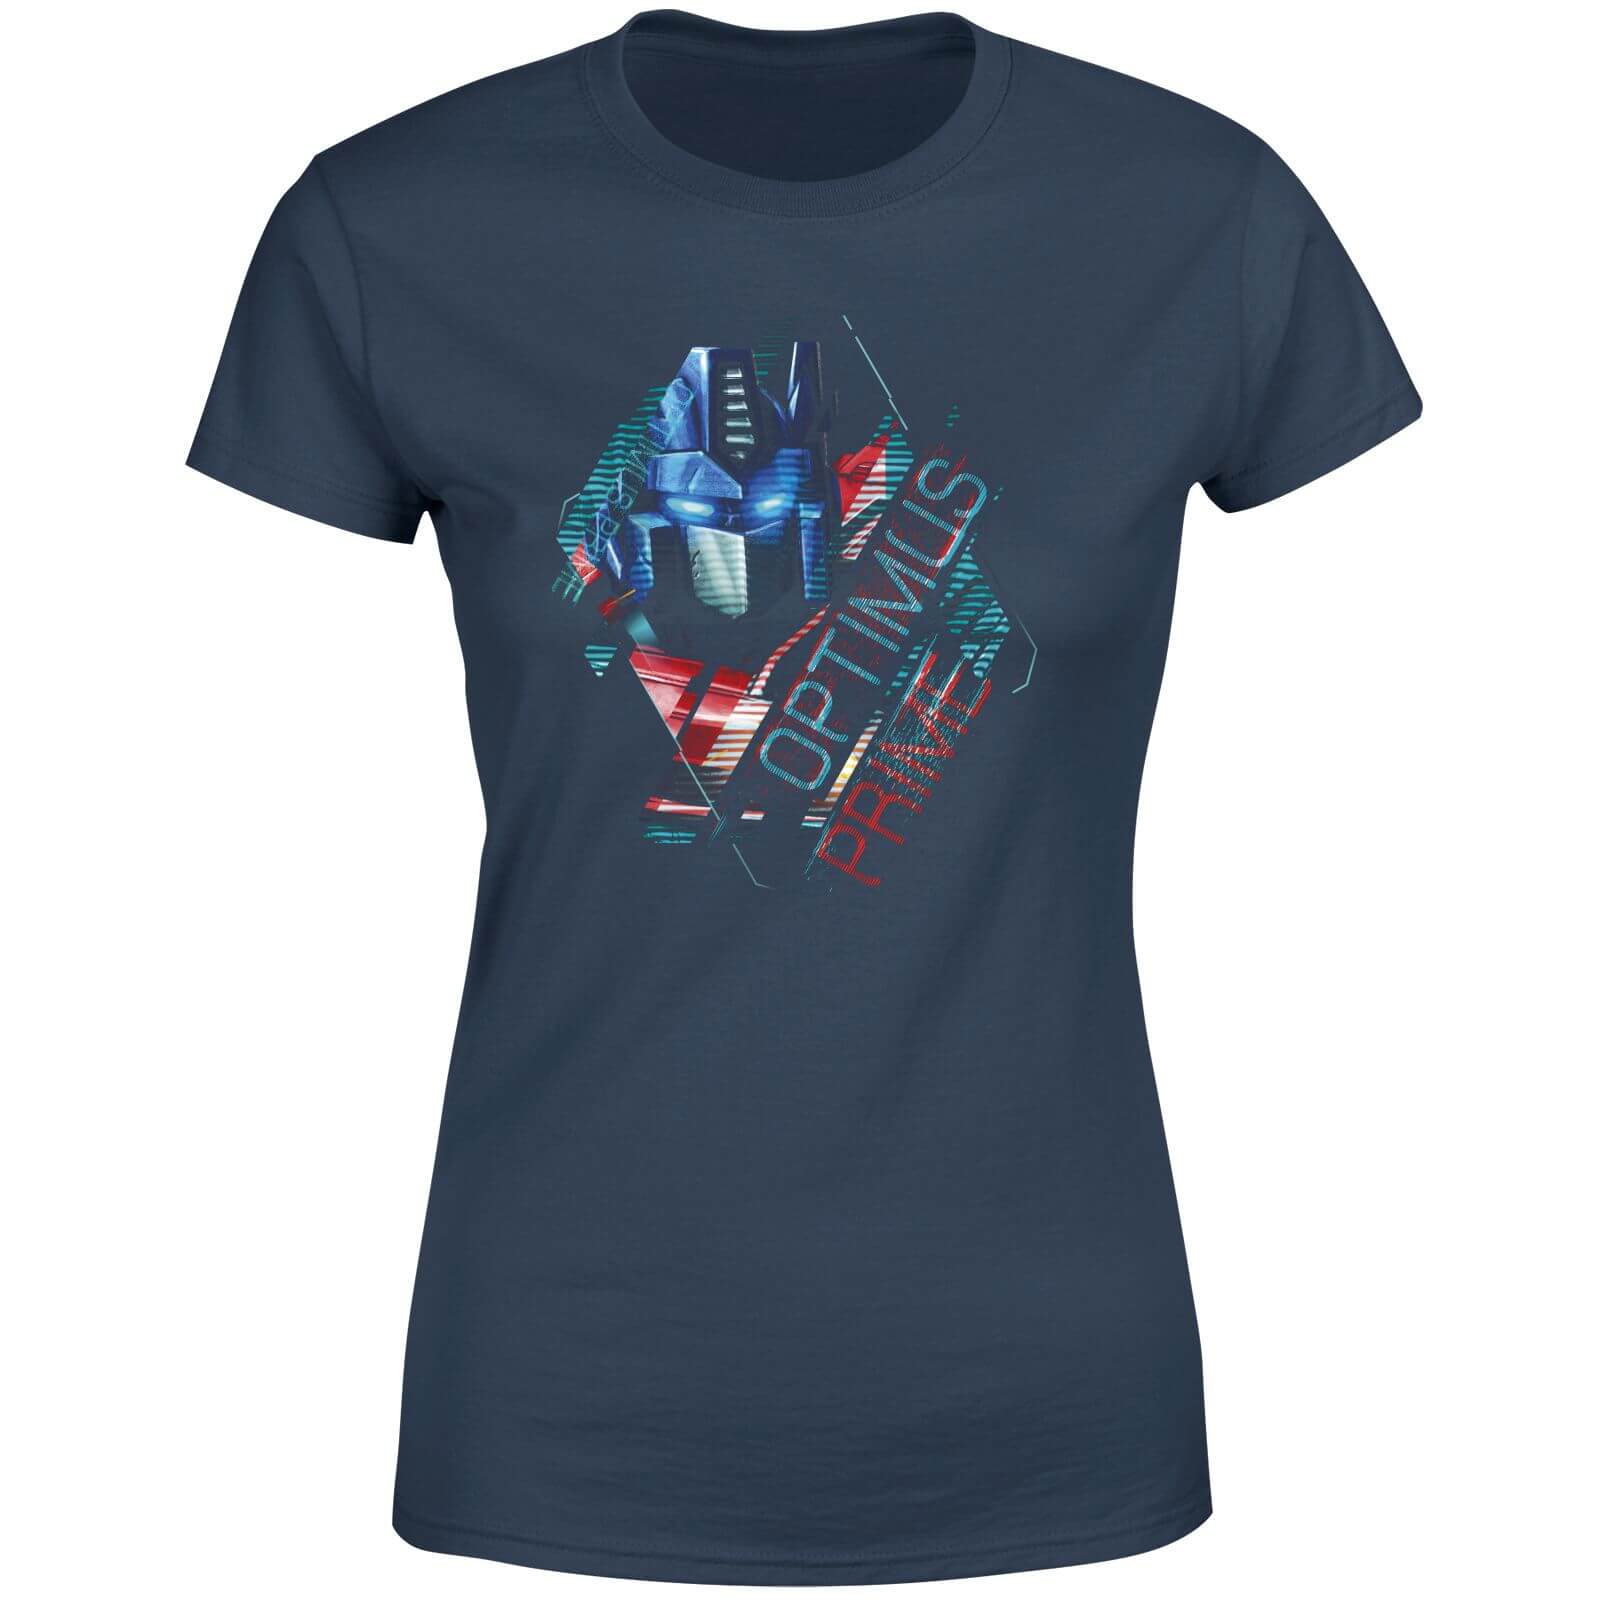 Transformers Optimus Prime Glitch Women's T-Shirt - Navy - M - Navy